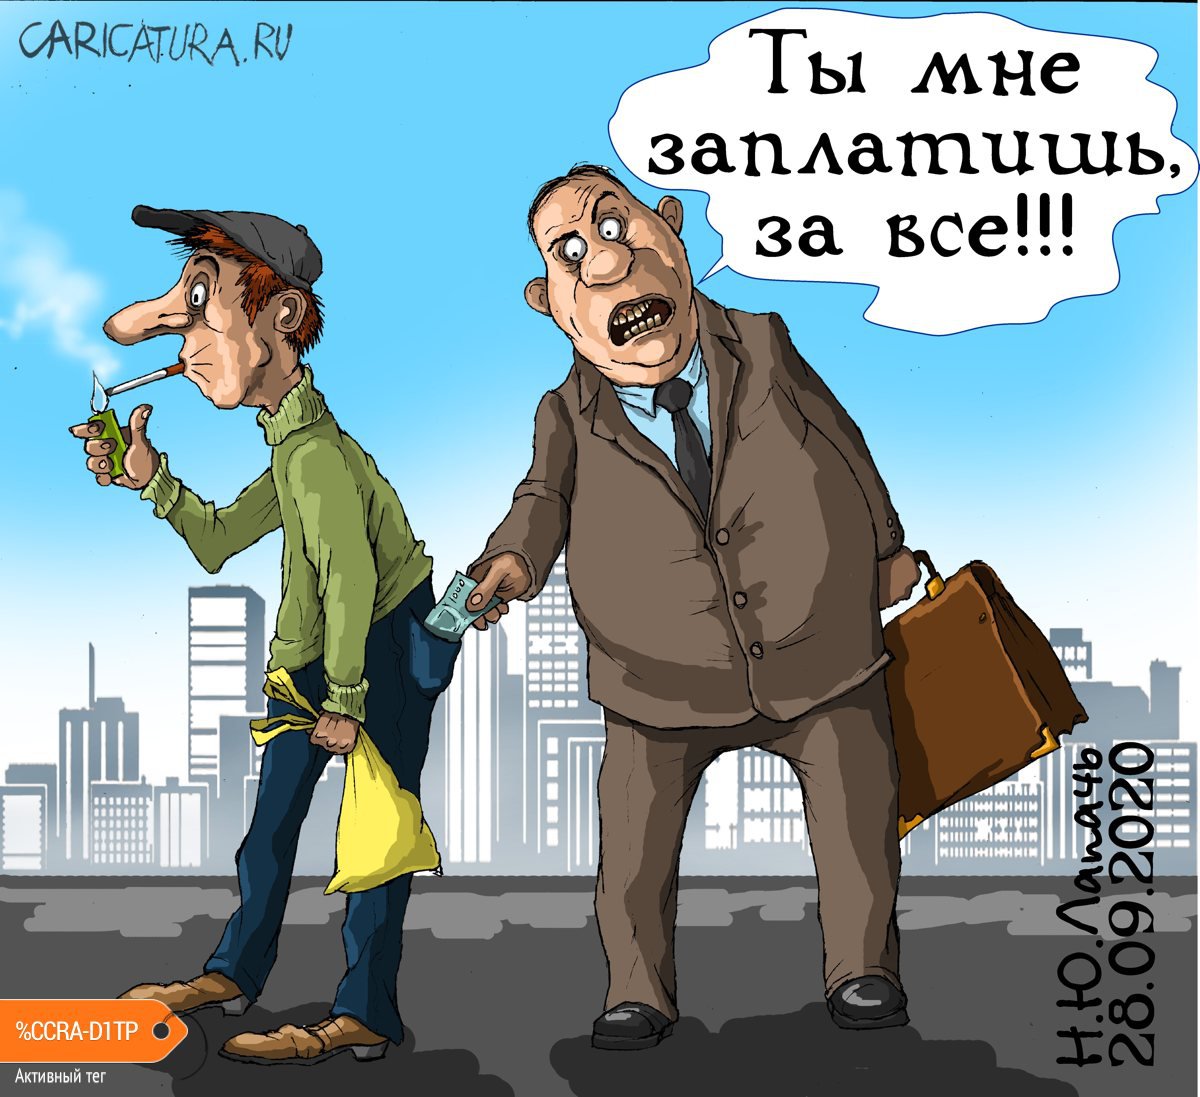 Карикатура "Крайний", Теплый Телогрей